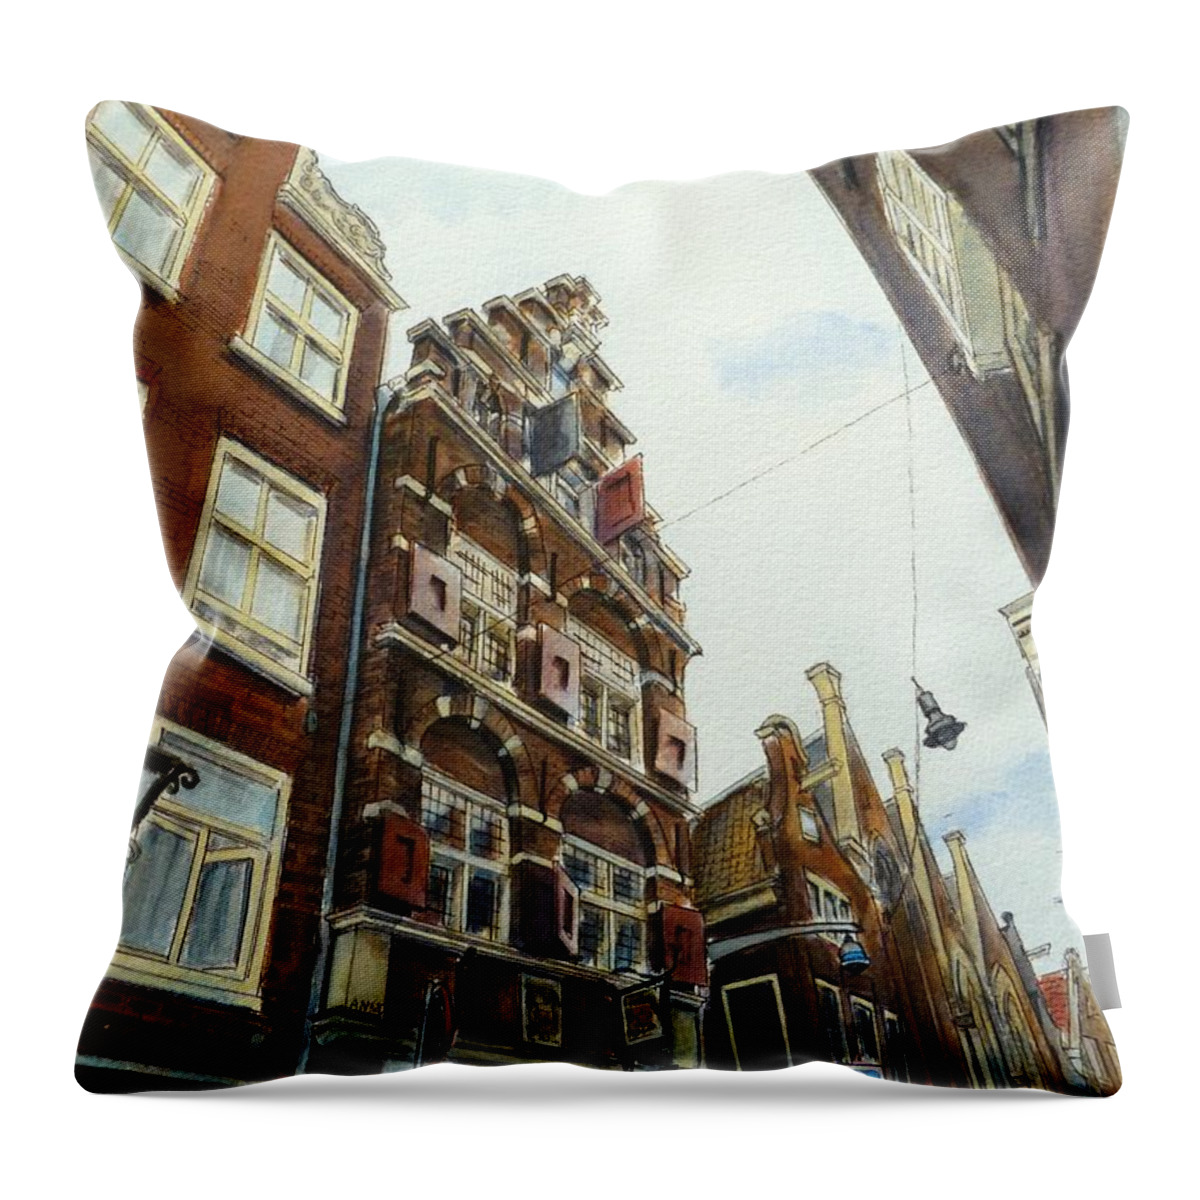 Amsterdam Throw Pillow featuring the painting Amsterdam II by Henrieta Maneva